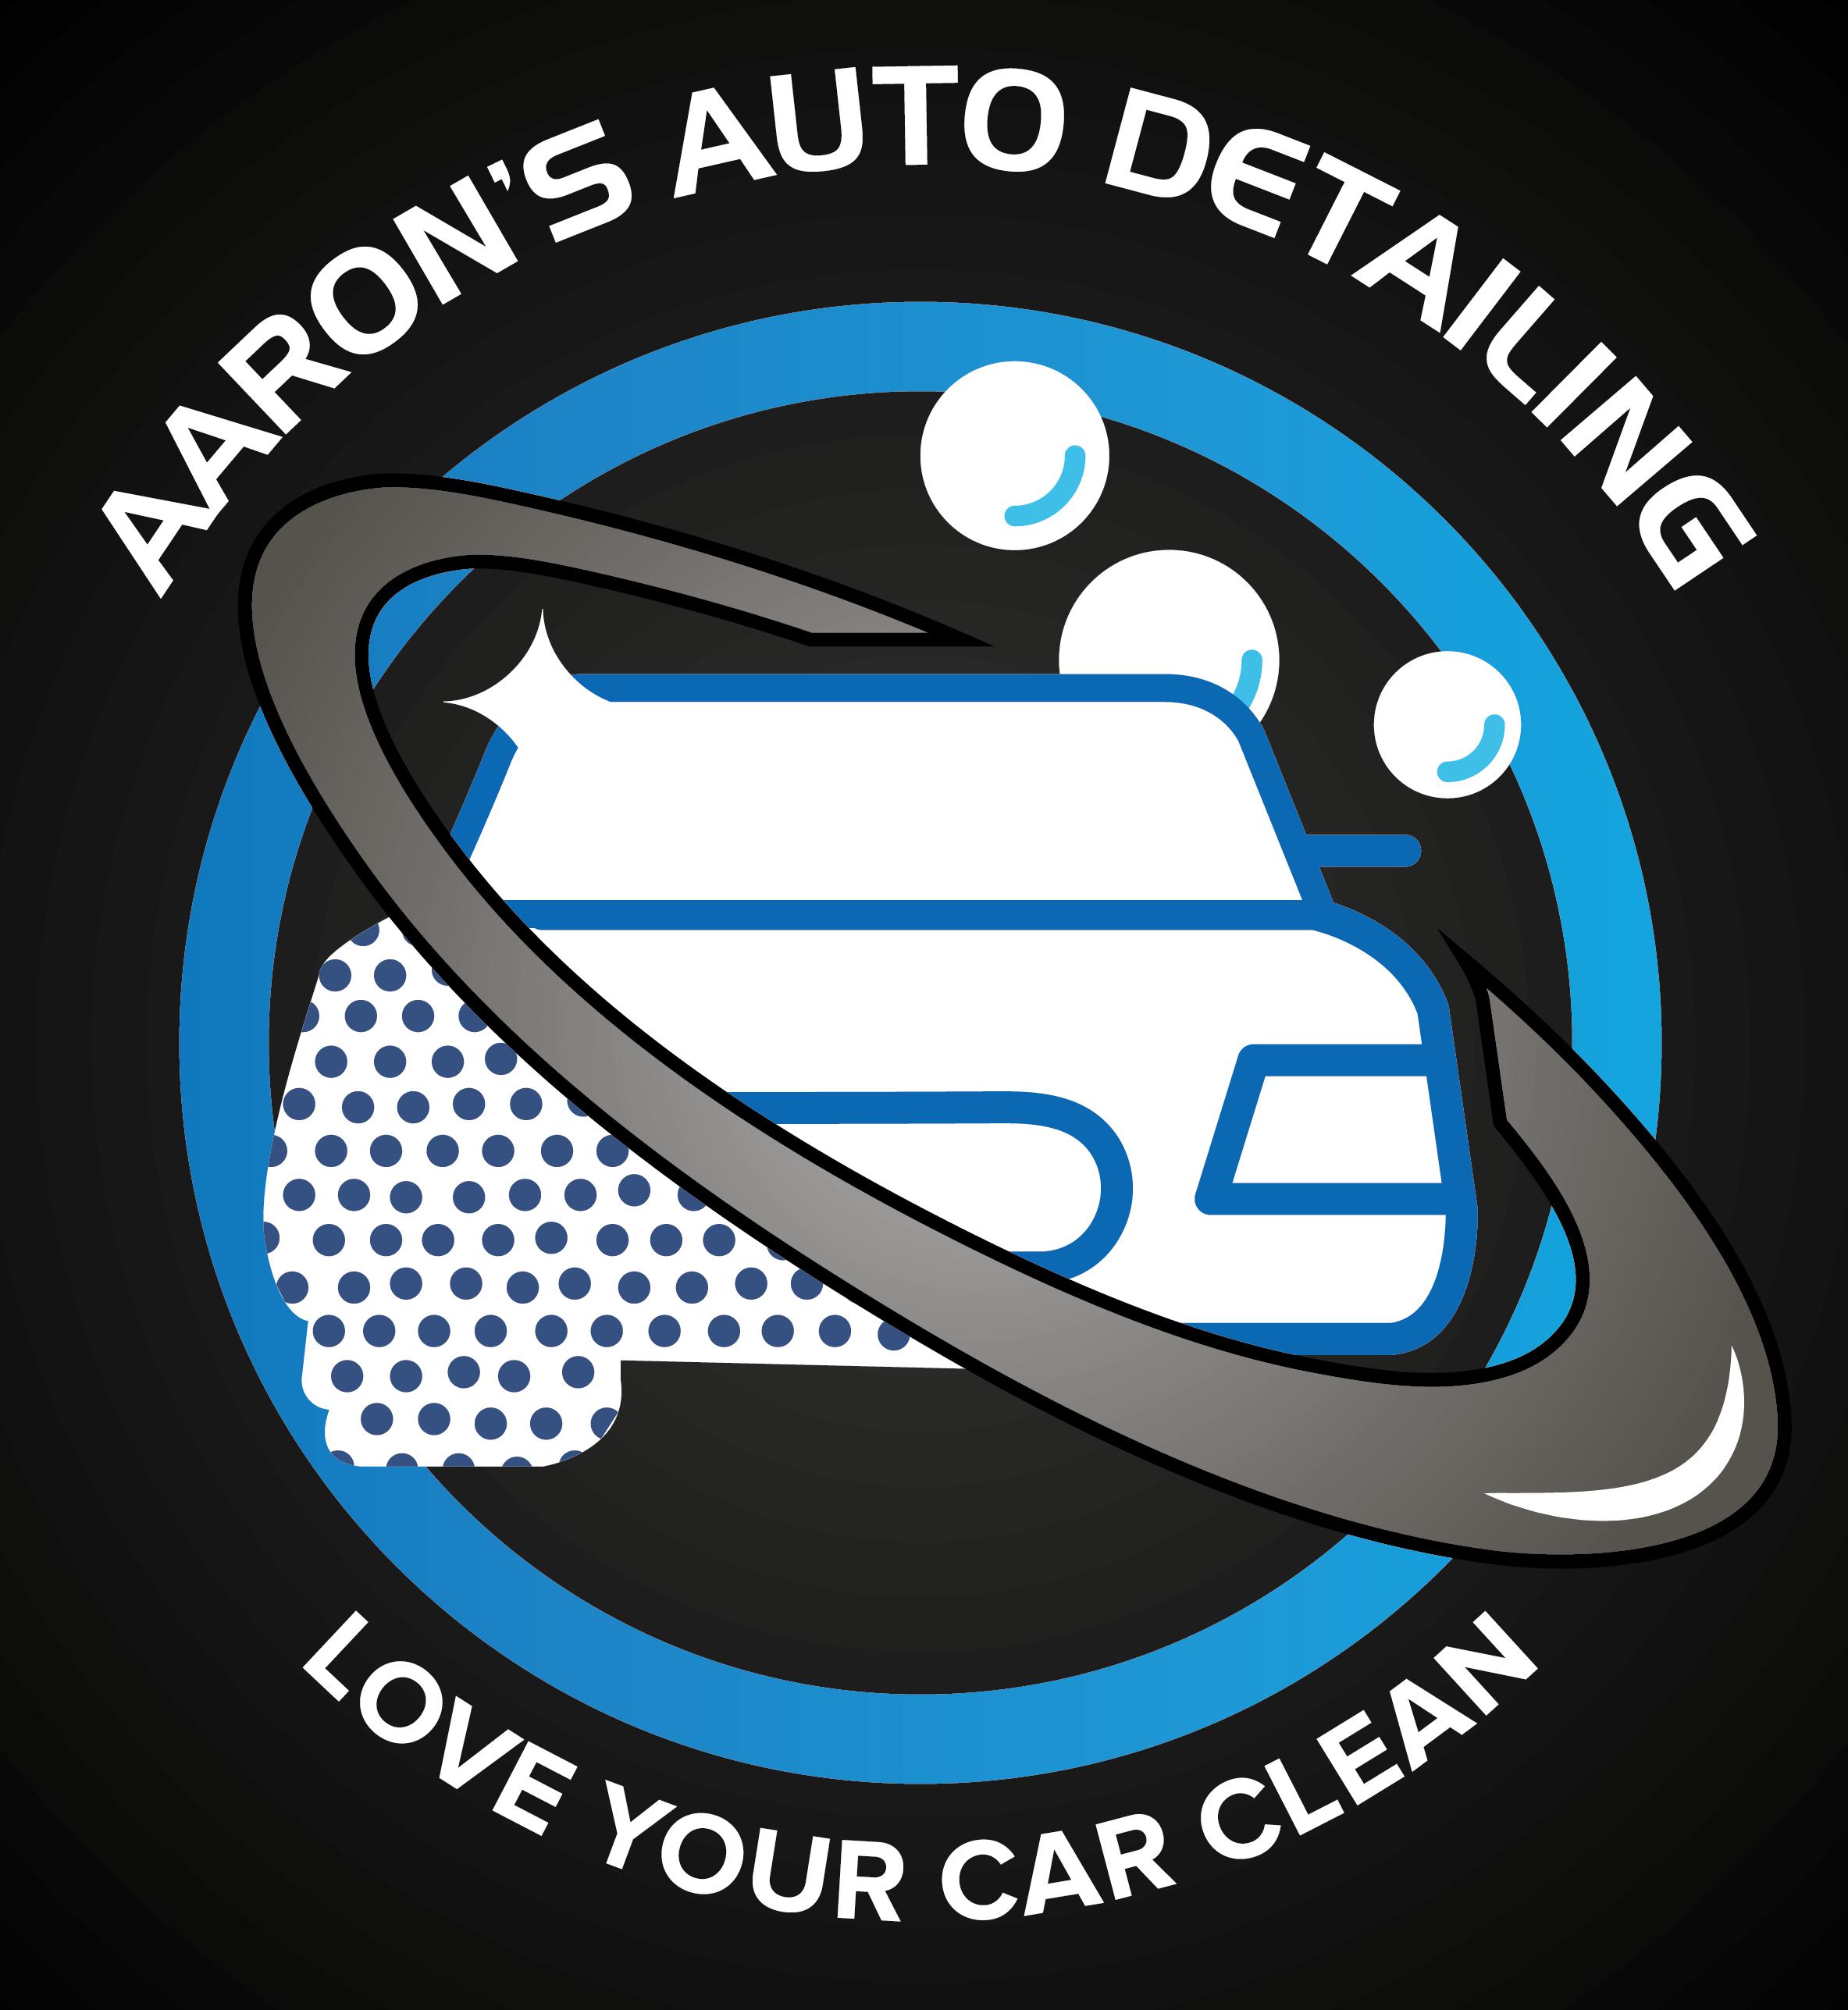 Aaron's Auto Detailing Logo